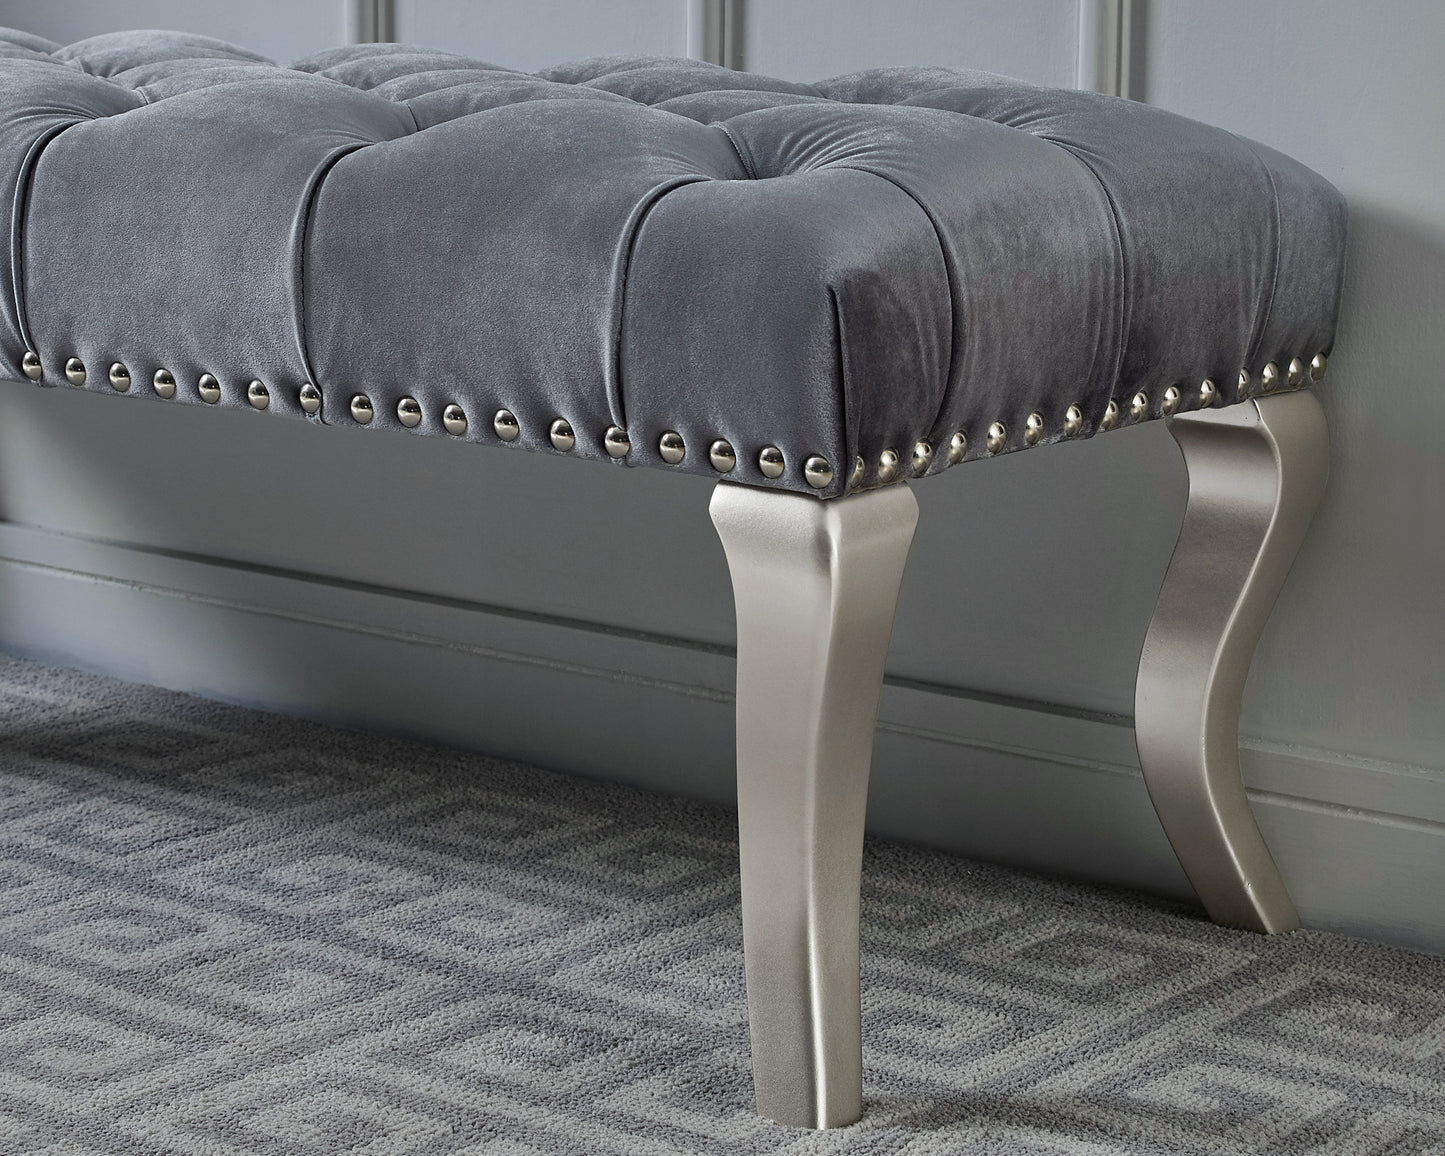 Decor Maxem Tufted Fabric Upholstered Bench Nailhead Trim , Gray